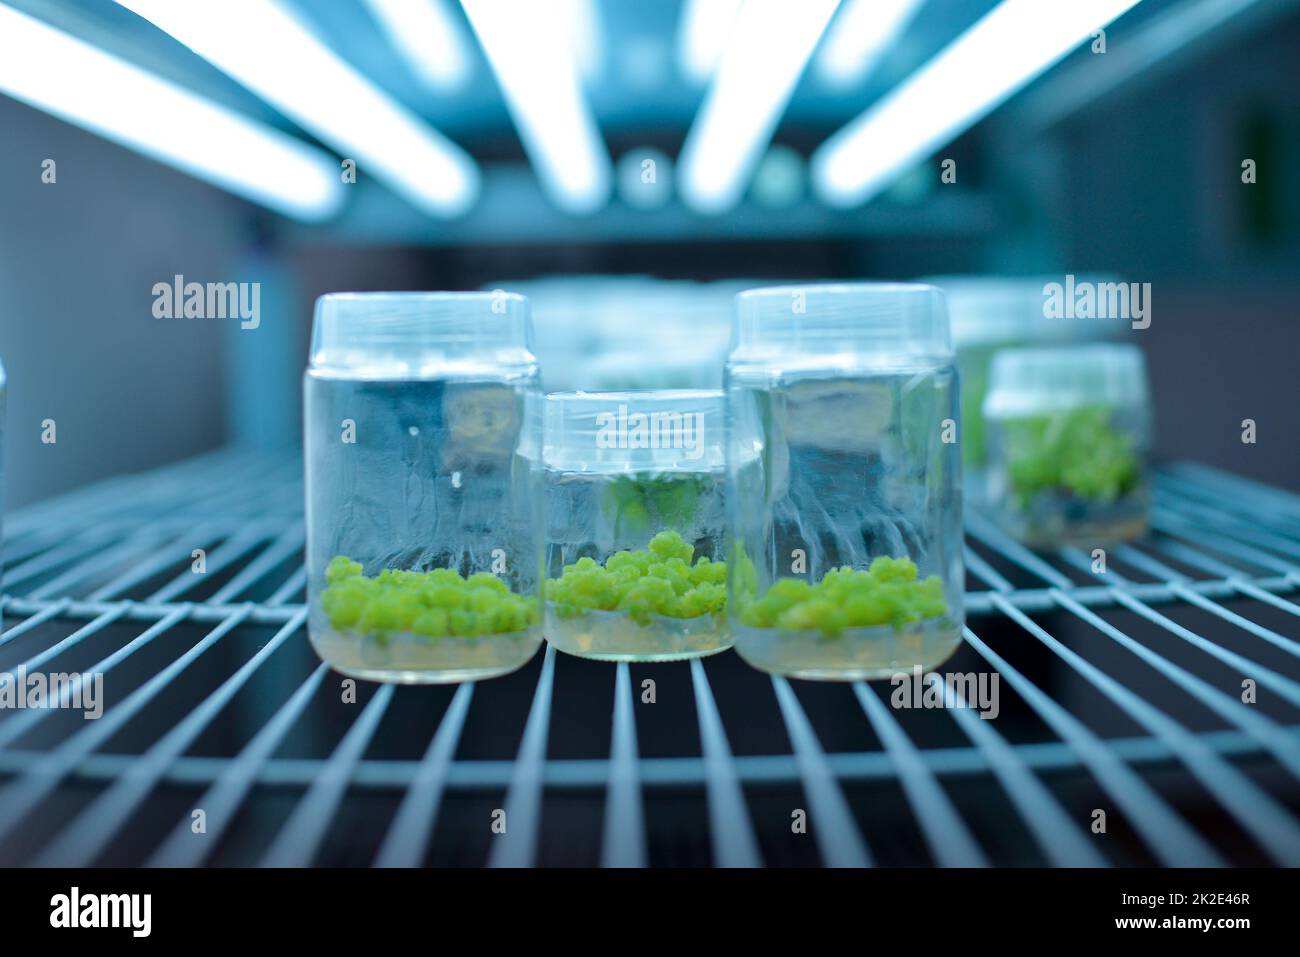 Plant callus tissue culture, biology science for plant regeneration. Stock Photo